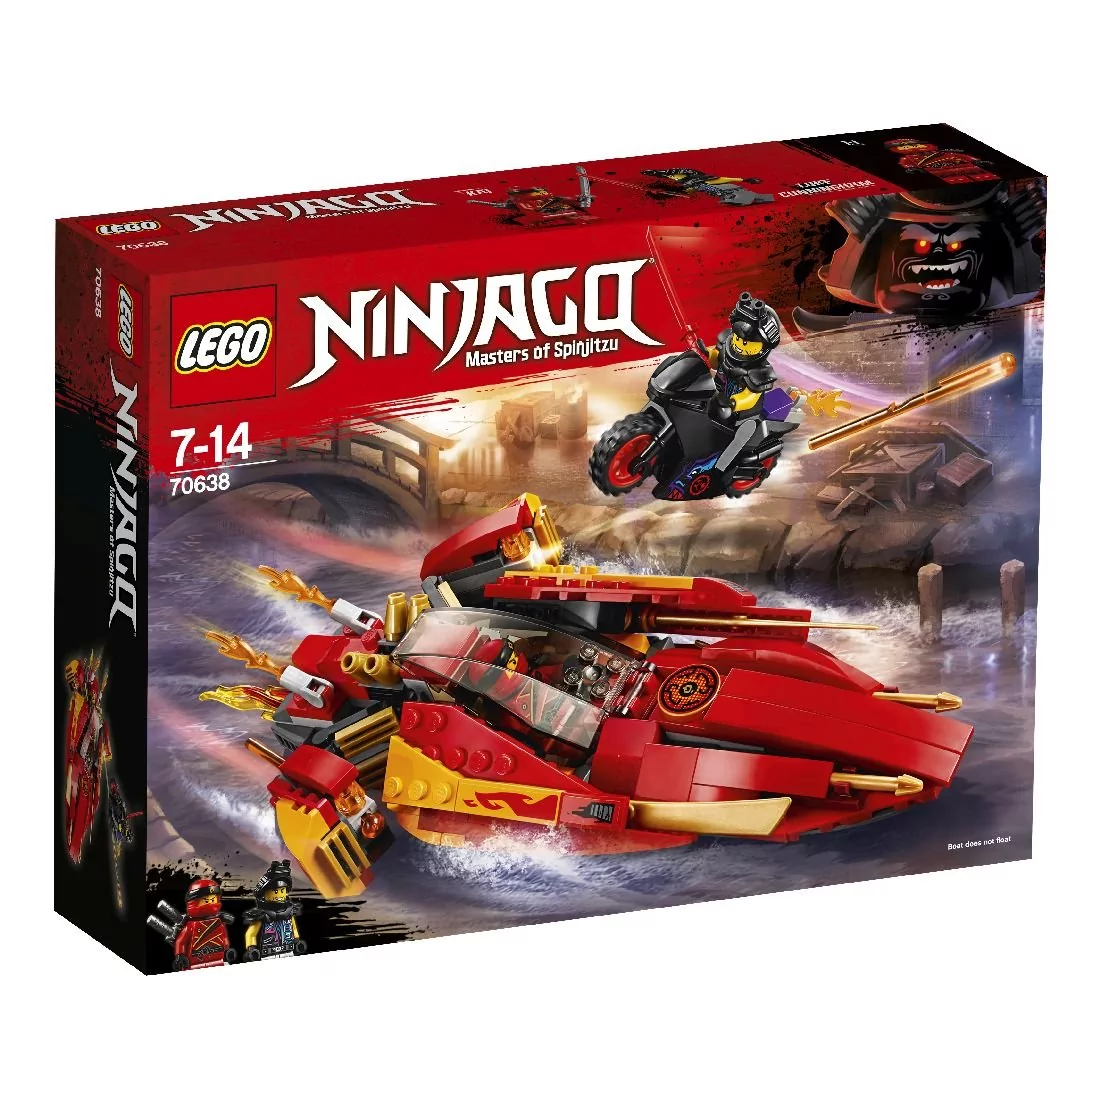 LEGO Ninjago Katana 70638